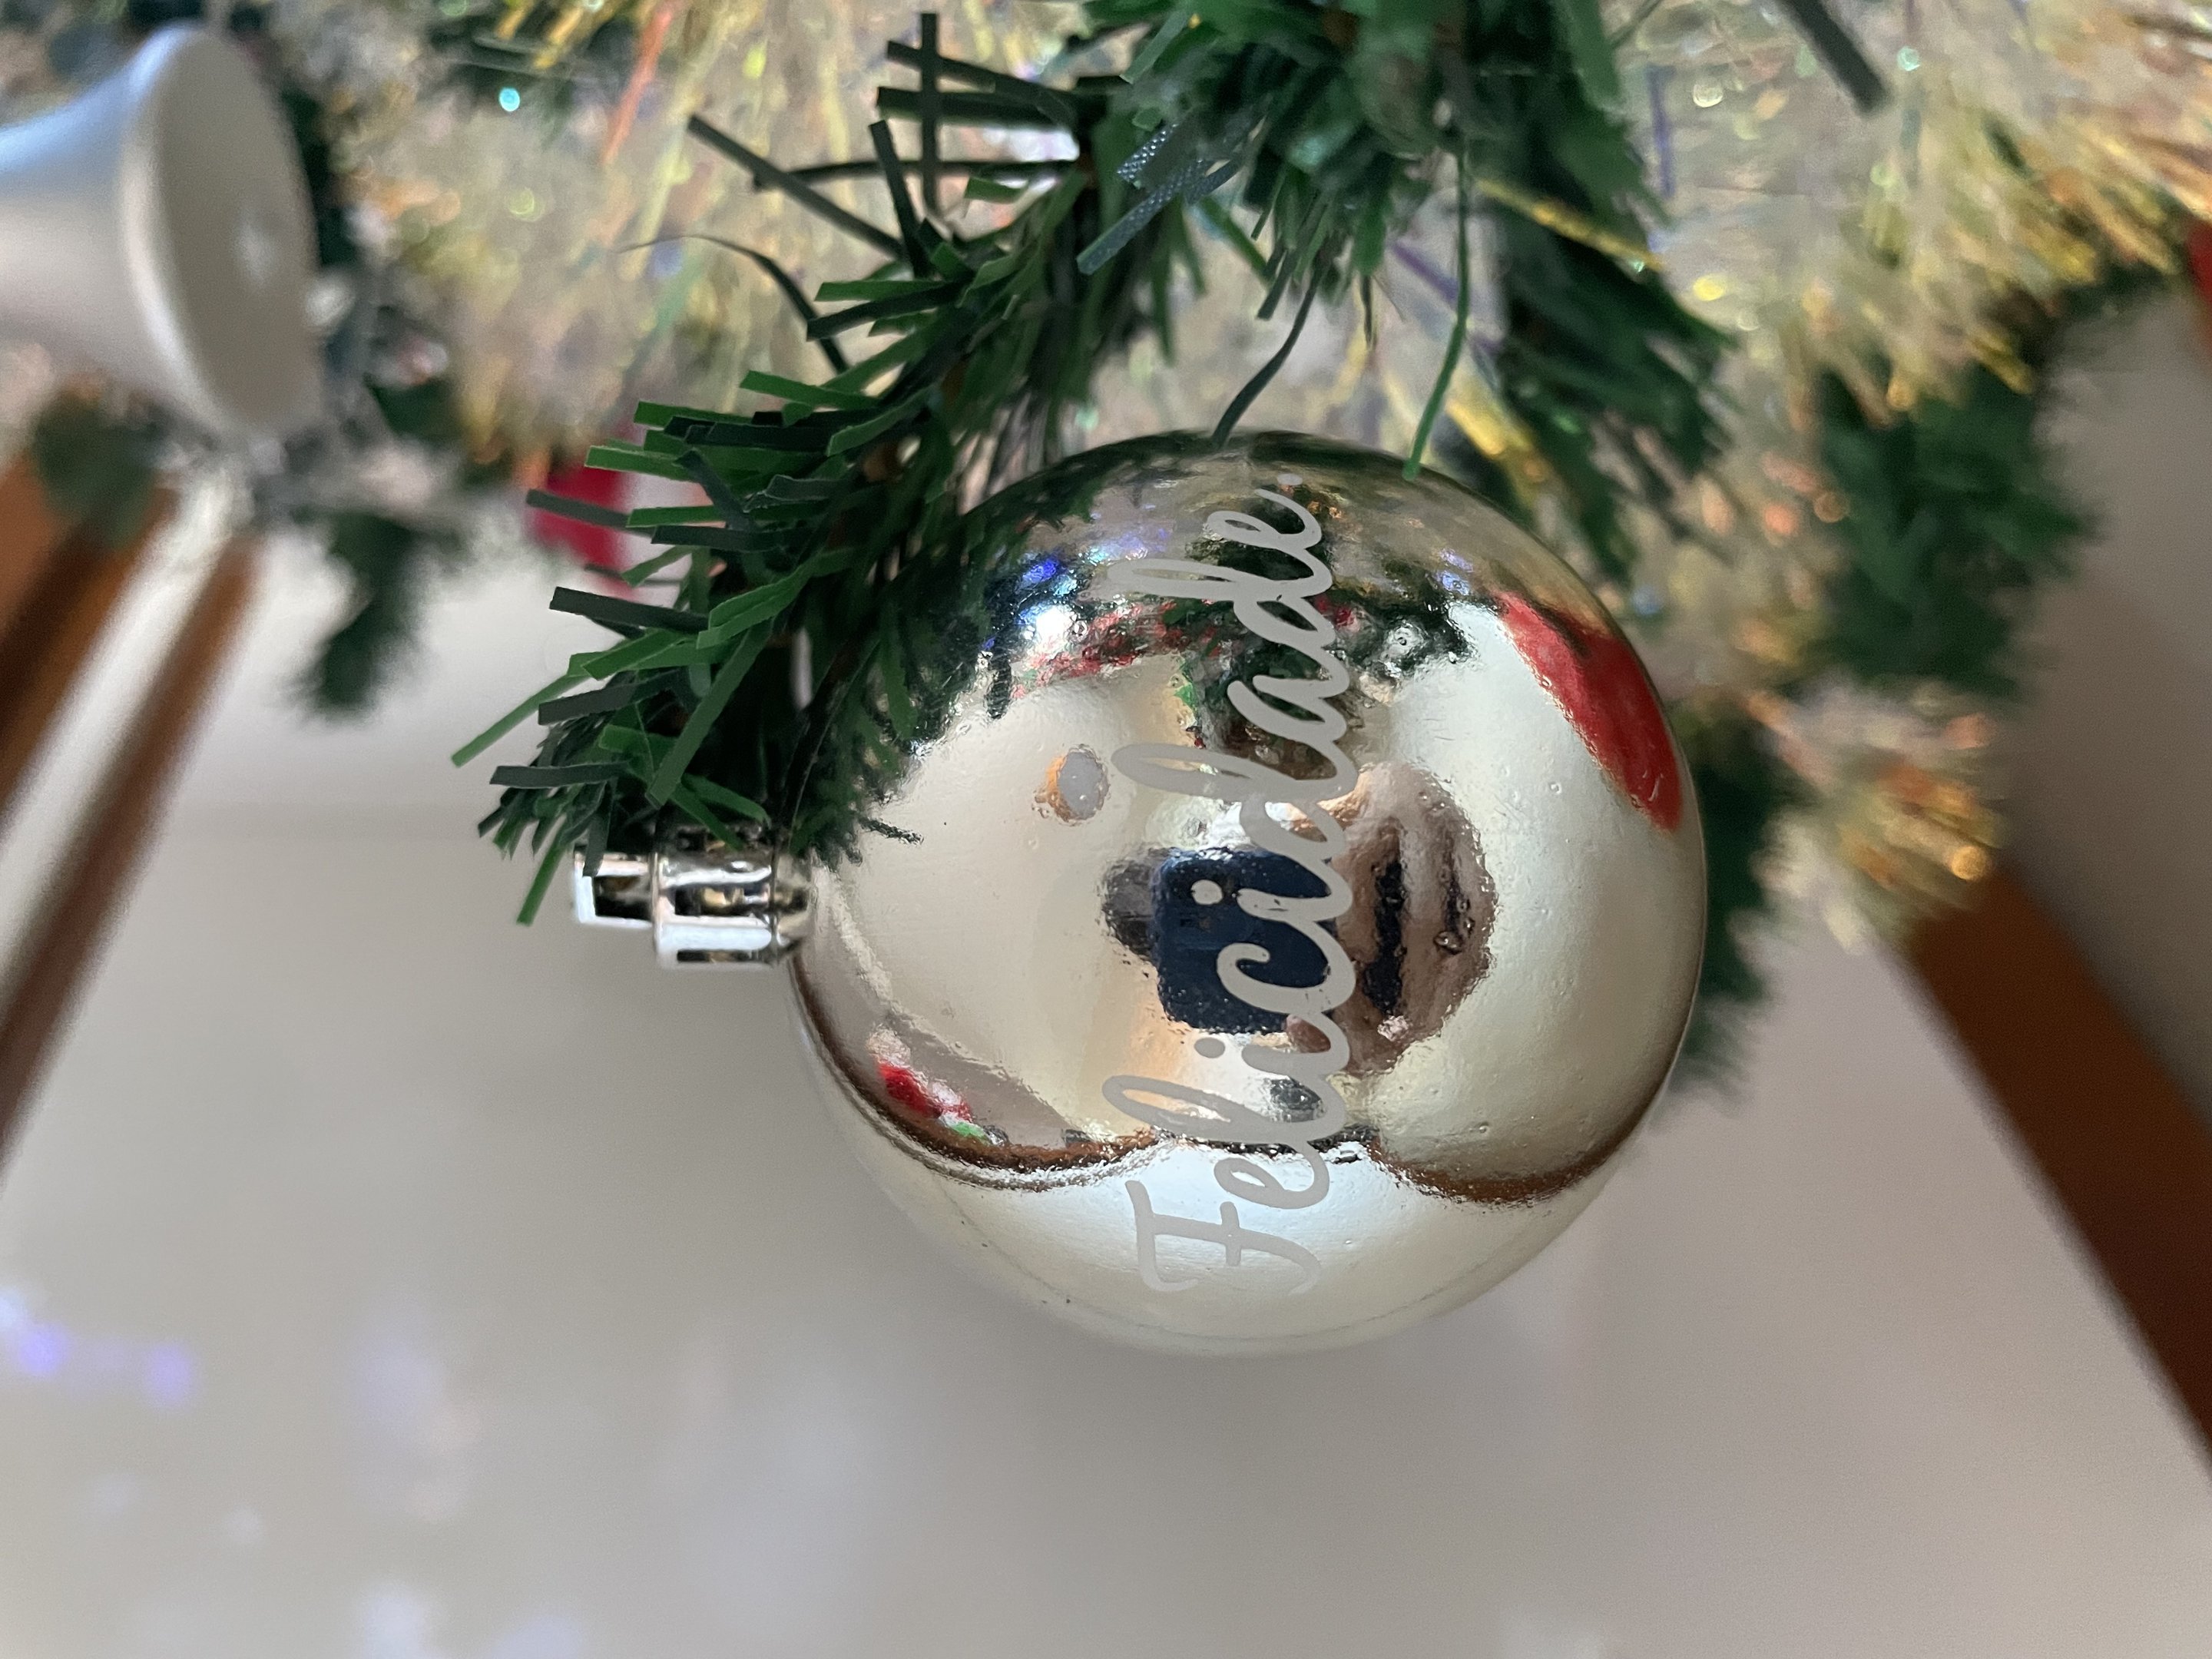 Kit decoração natalinaNatal / Arvore / sinos / enfeites / boneco